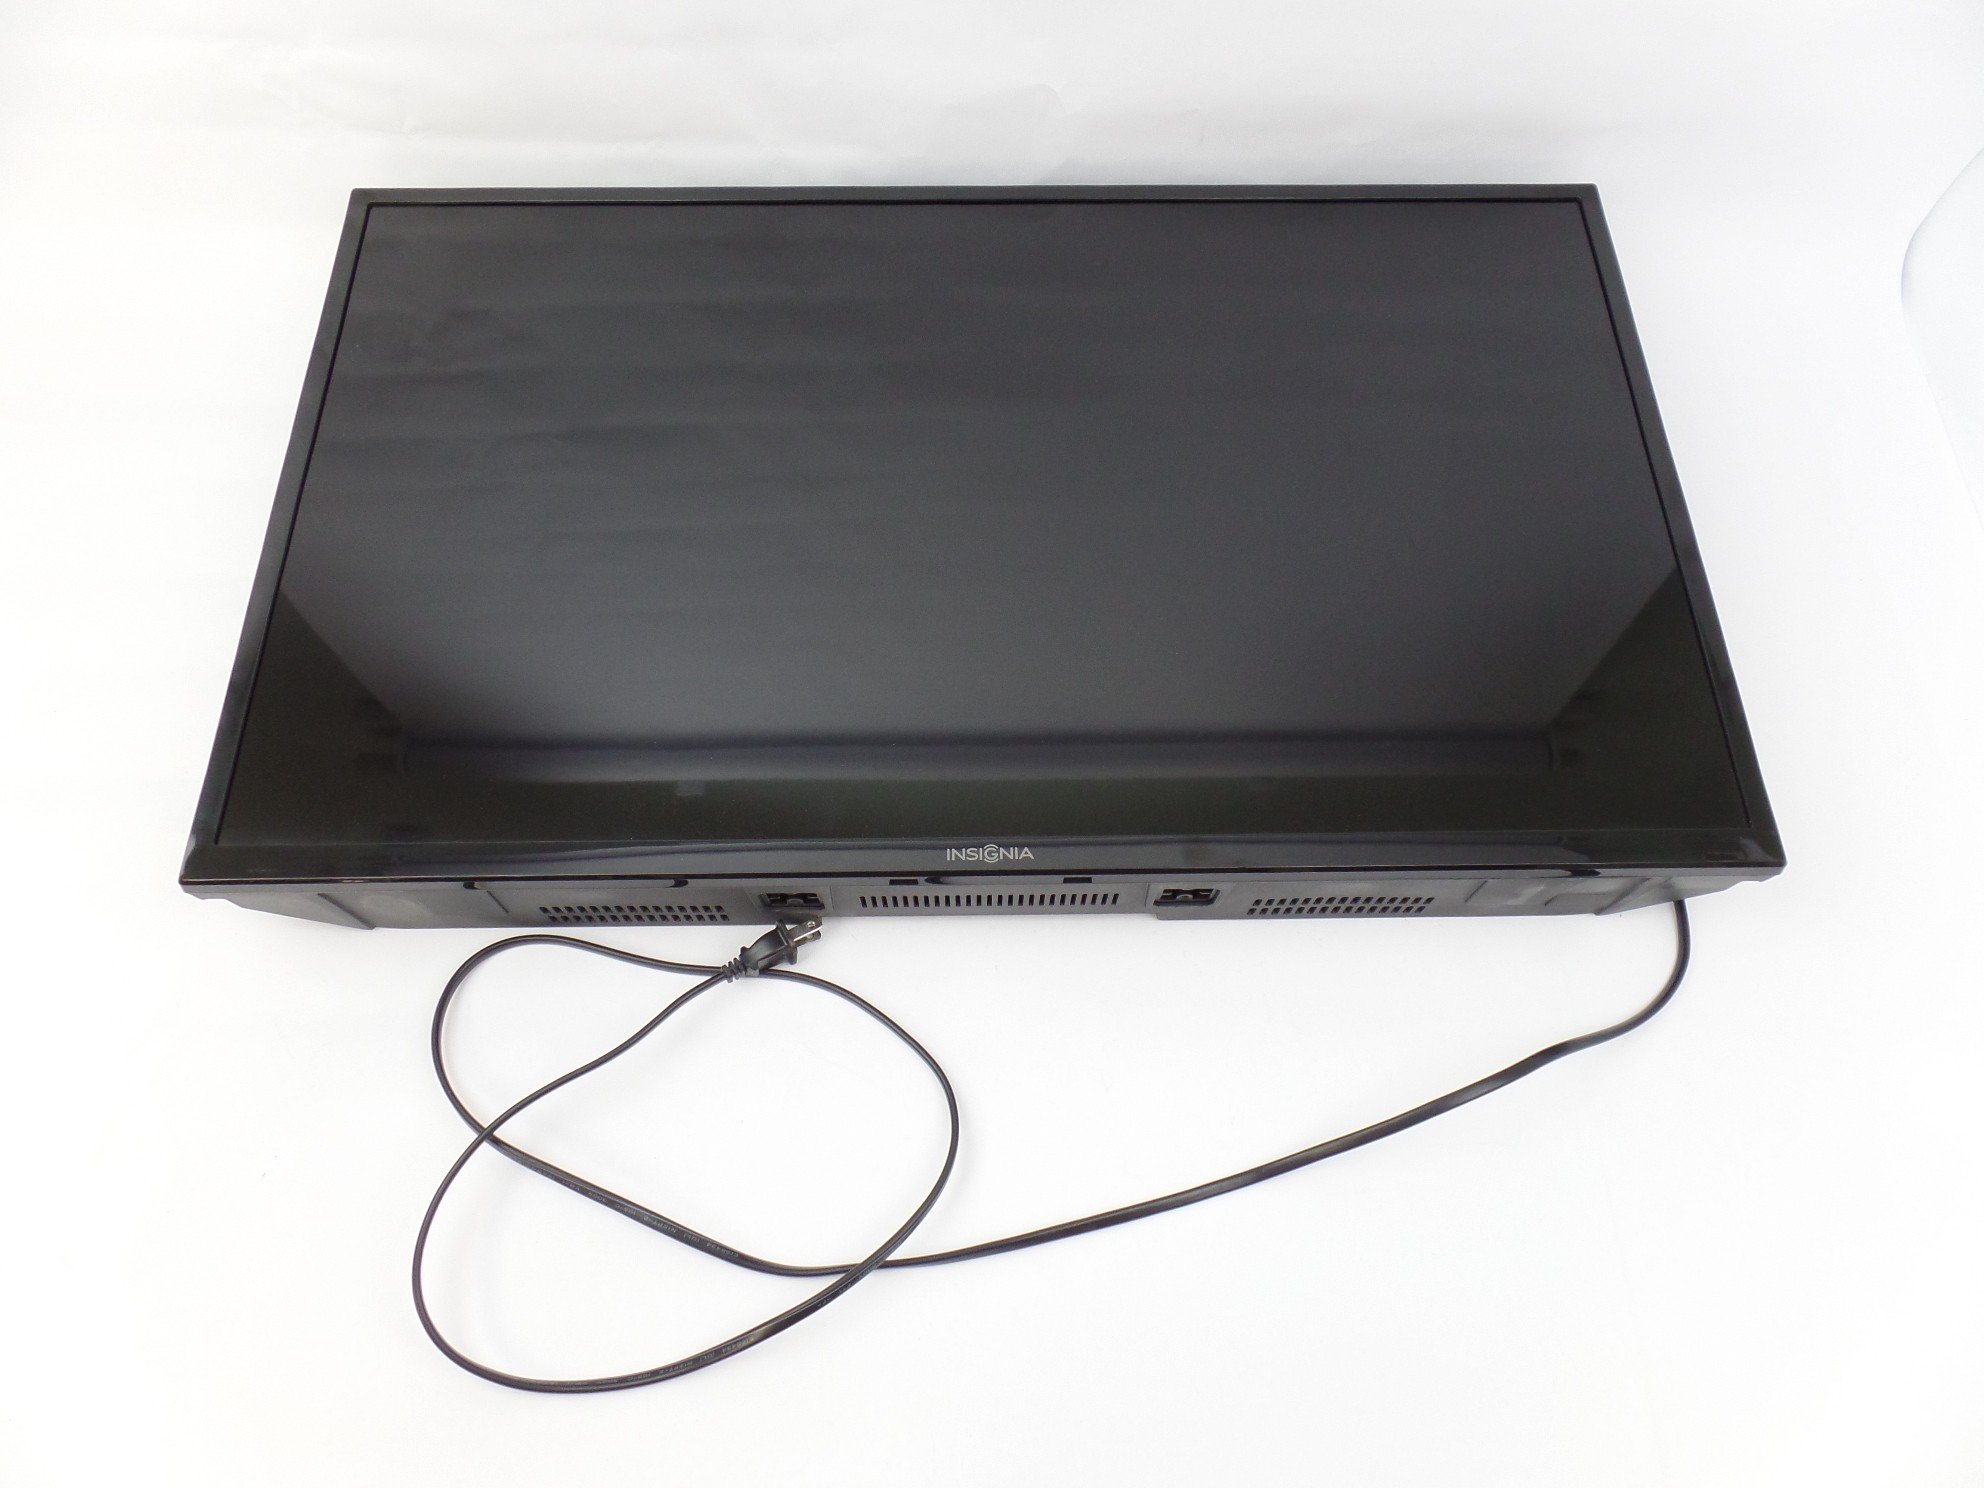 Insignia 32" LCD TV HDTV HDMI USB 720p 60Hz NS-32D511NA15